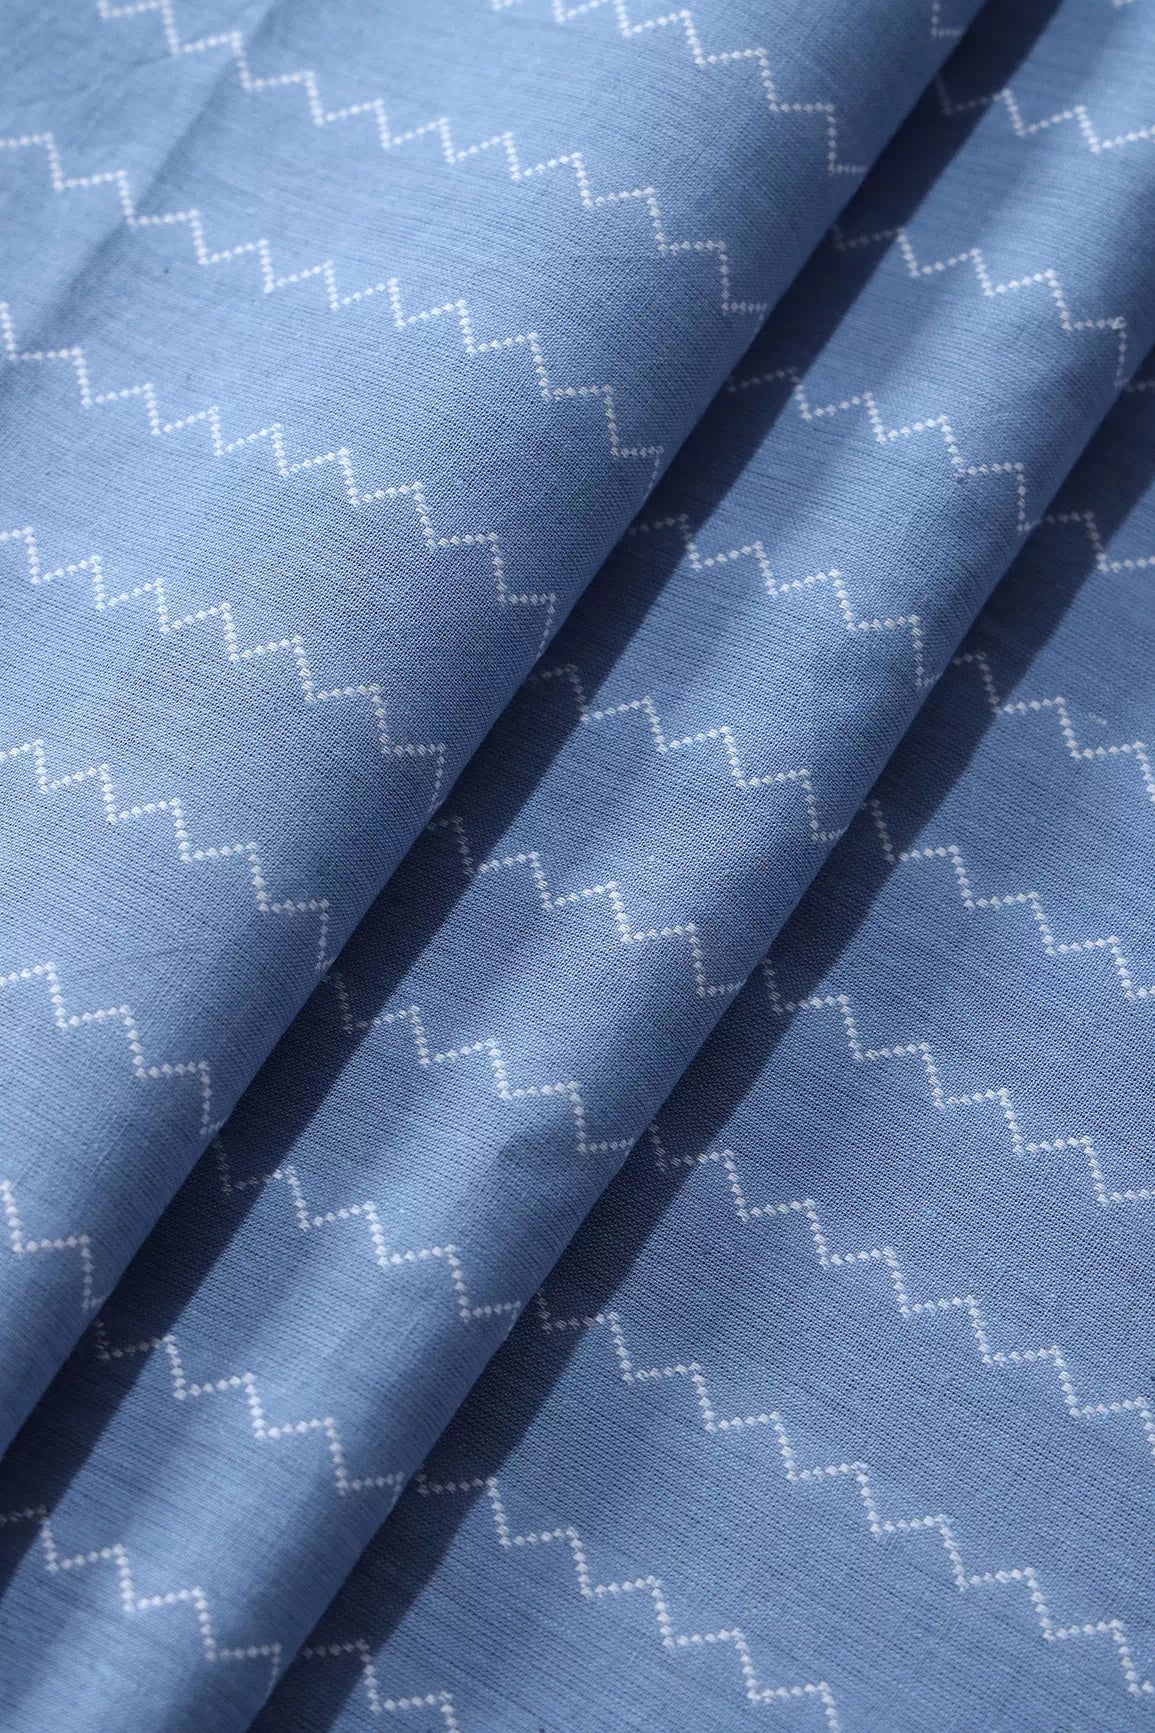 Pastel Blue And White Chevron Pattern On Handwoven Organic Cotton Fabric - doeraa